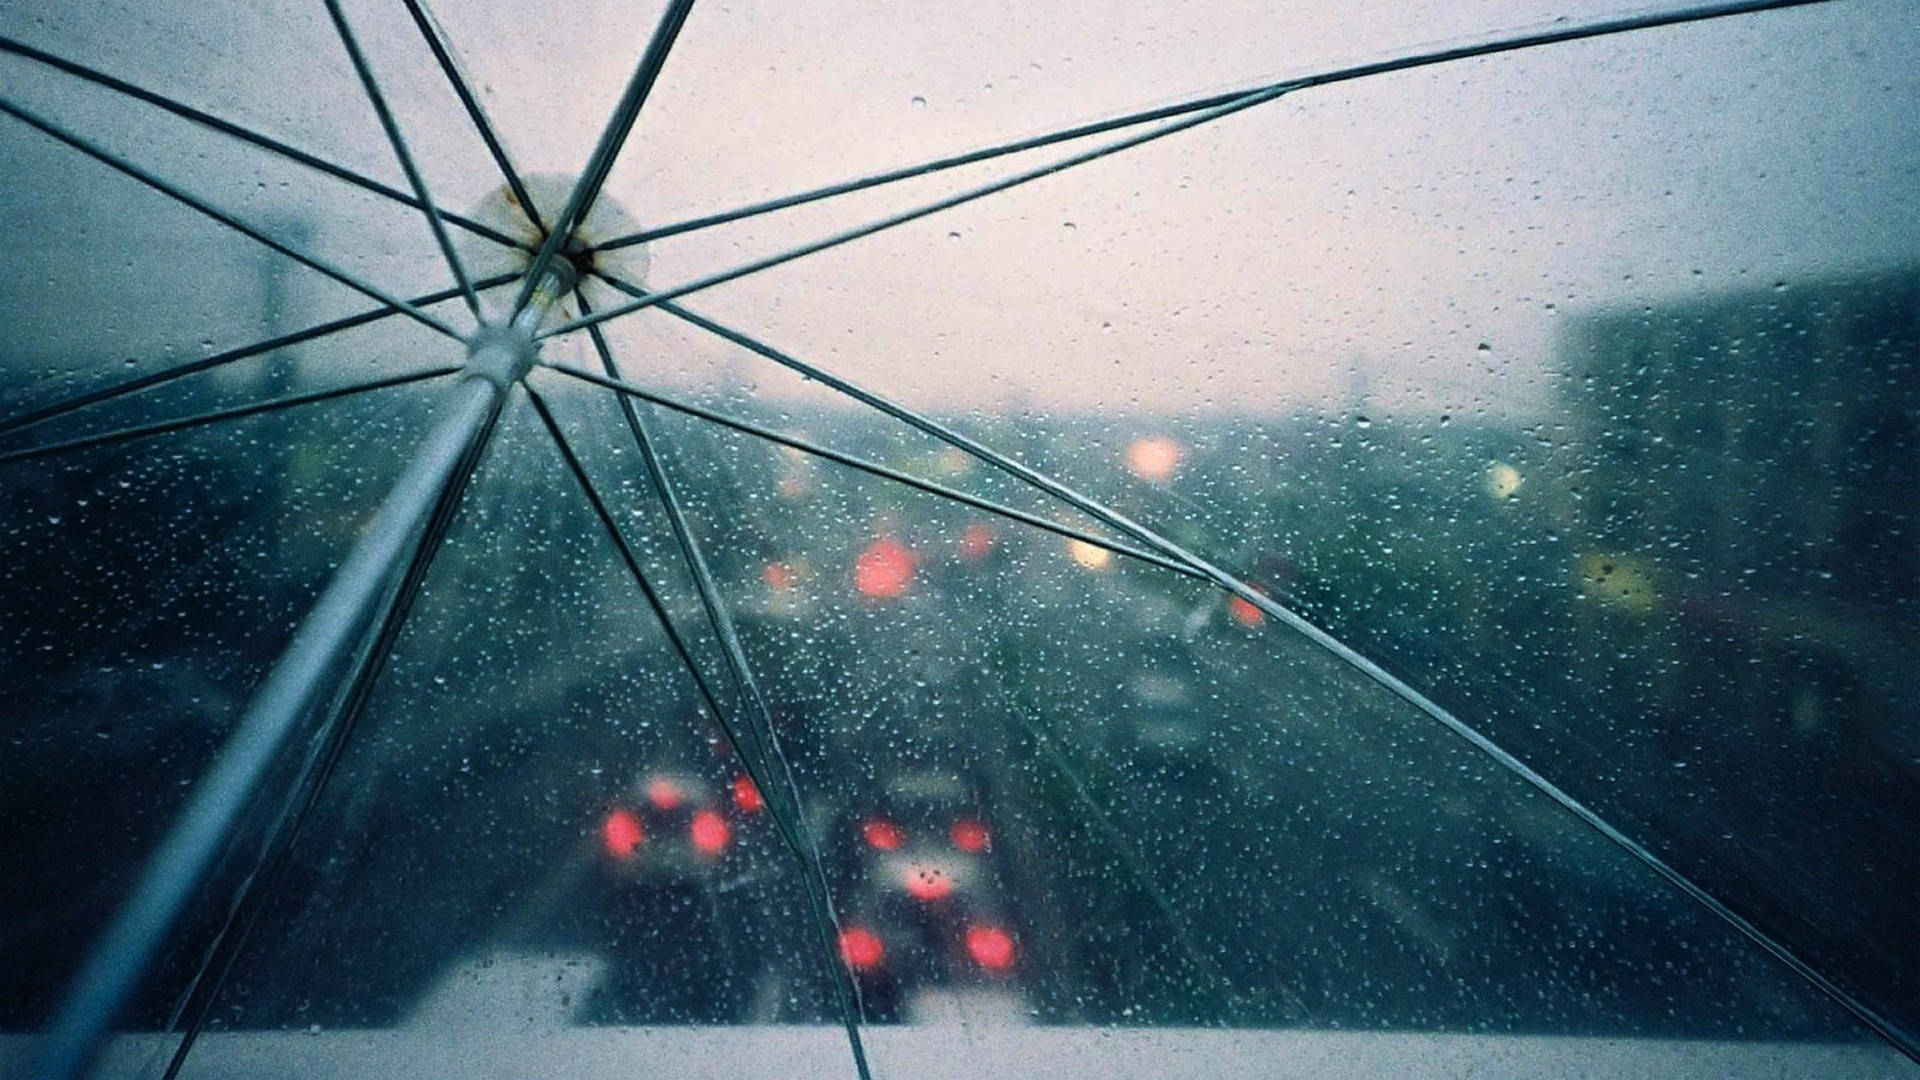 See-through Umbrella While It's Raining